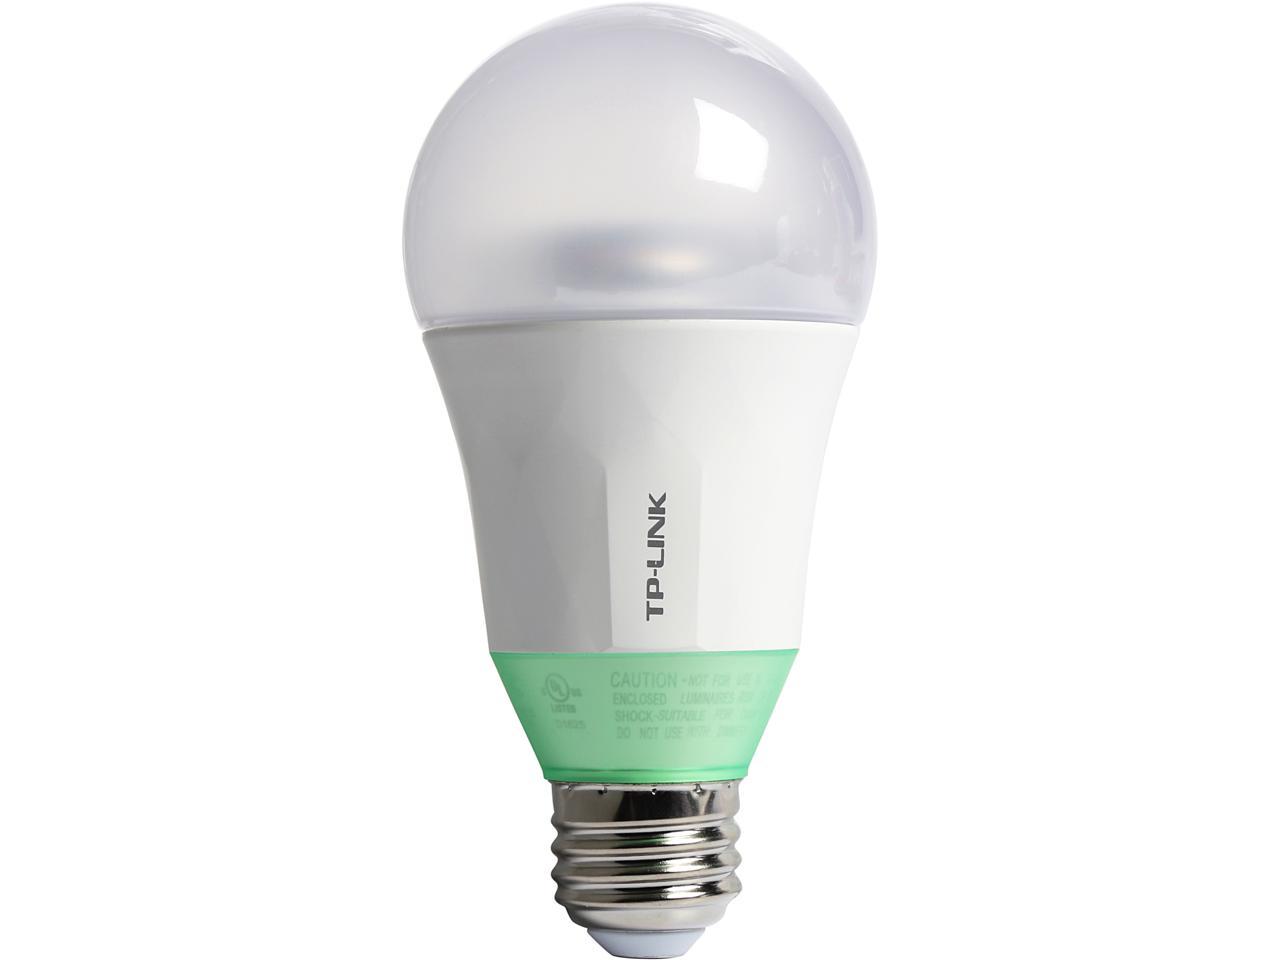 TP-LINK Kasa Smart Wi-Fi LED Bulb (A19 Bulb, Fitting, 800 Lumens 60W, 2700K) with Light, Compatible with Google Home and Amazon Echo Alexa - Newegg.com